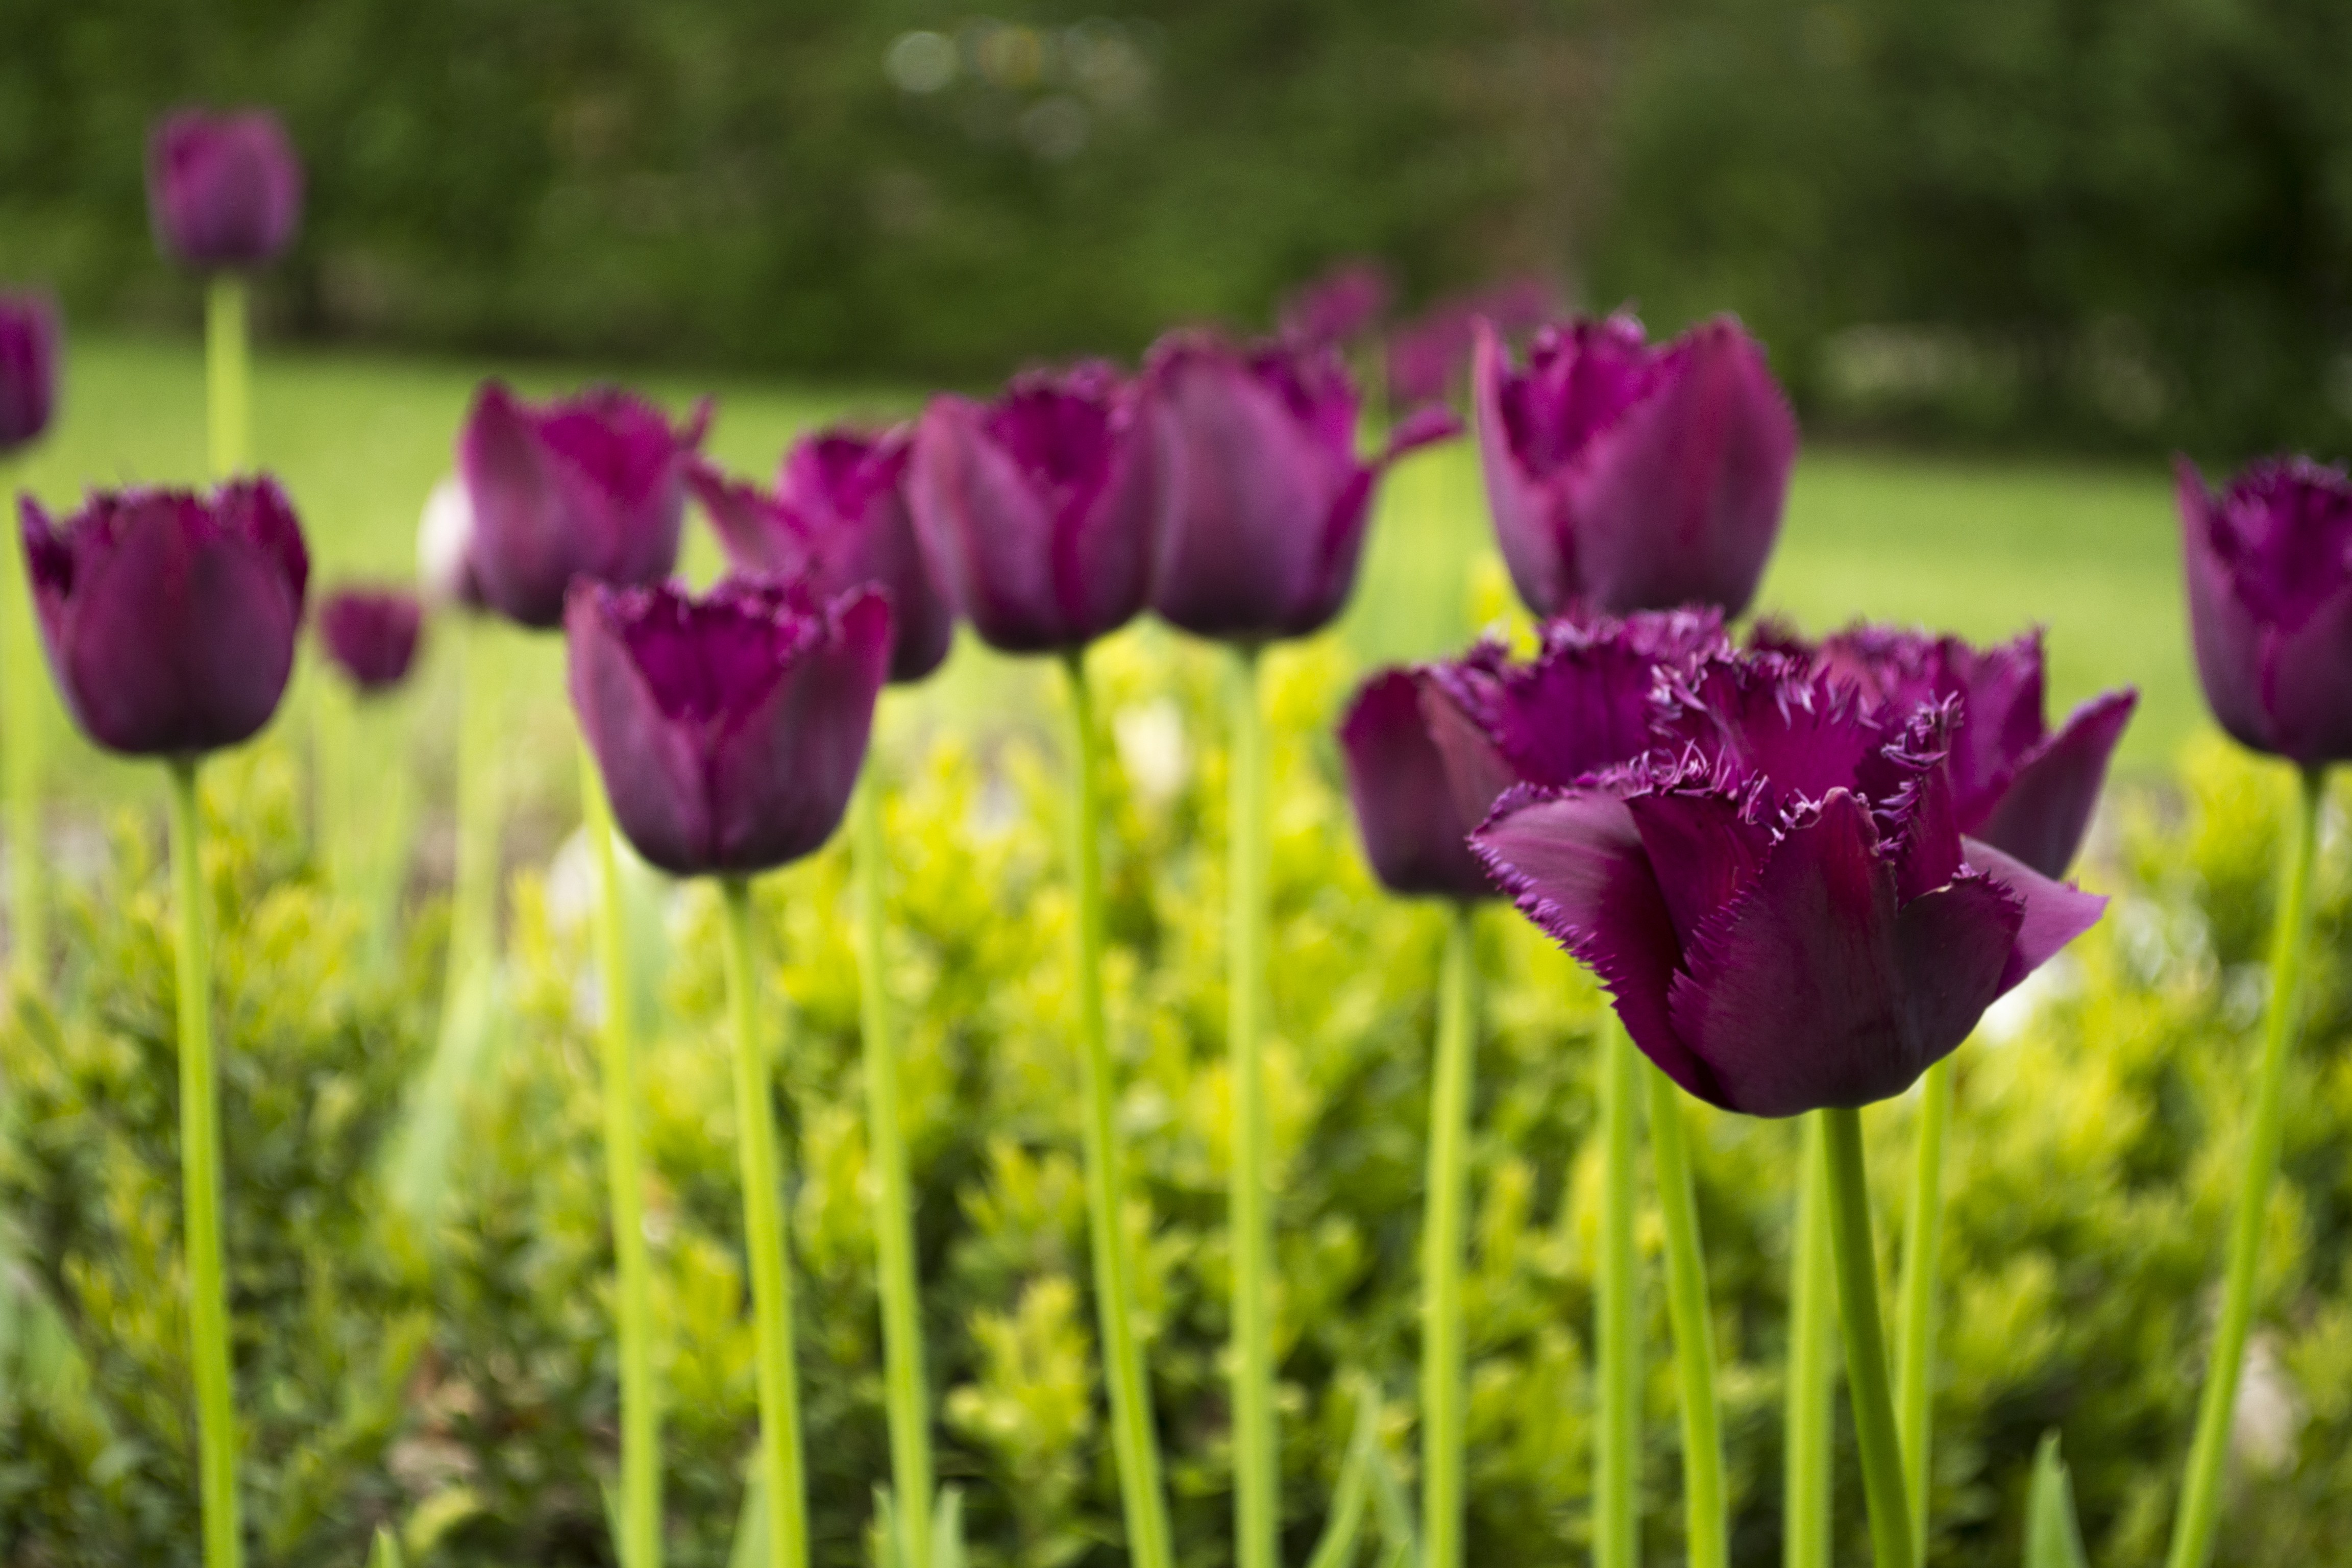 General 4608x3072 tulips flowers purple flowers plants outdoors spring